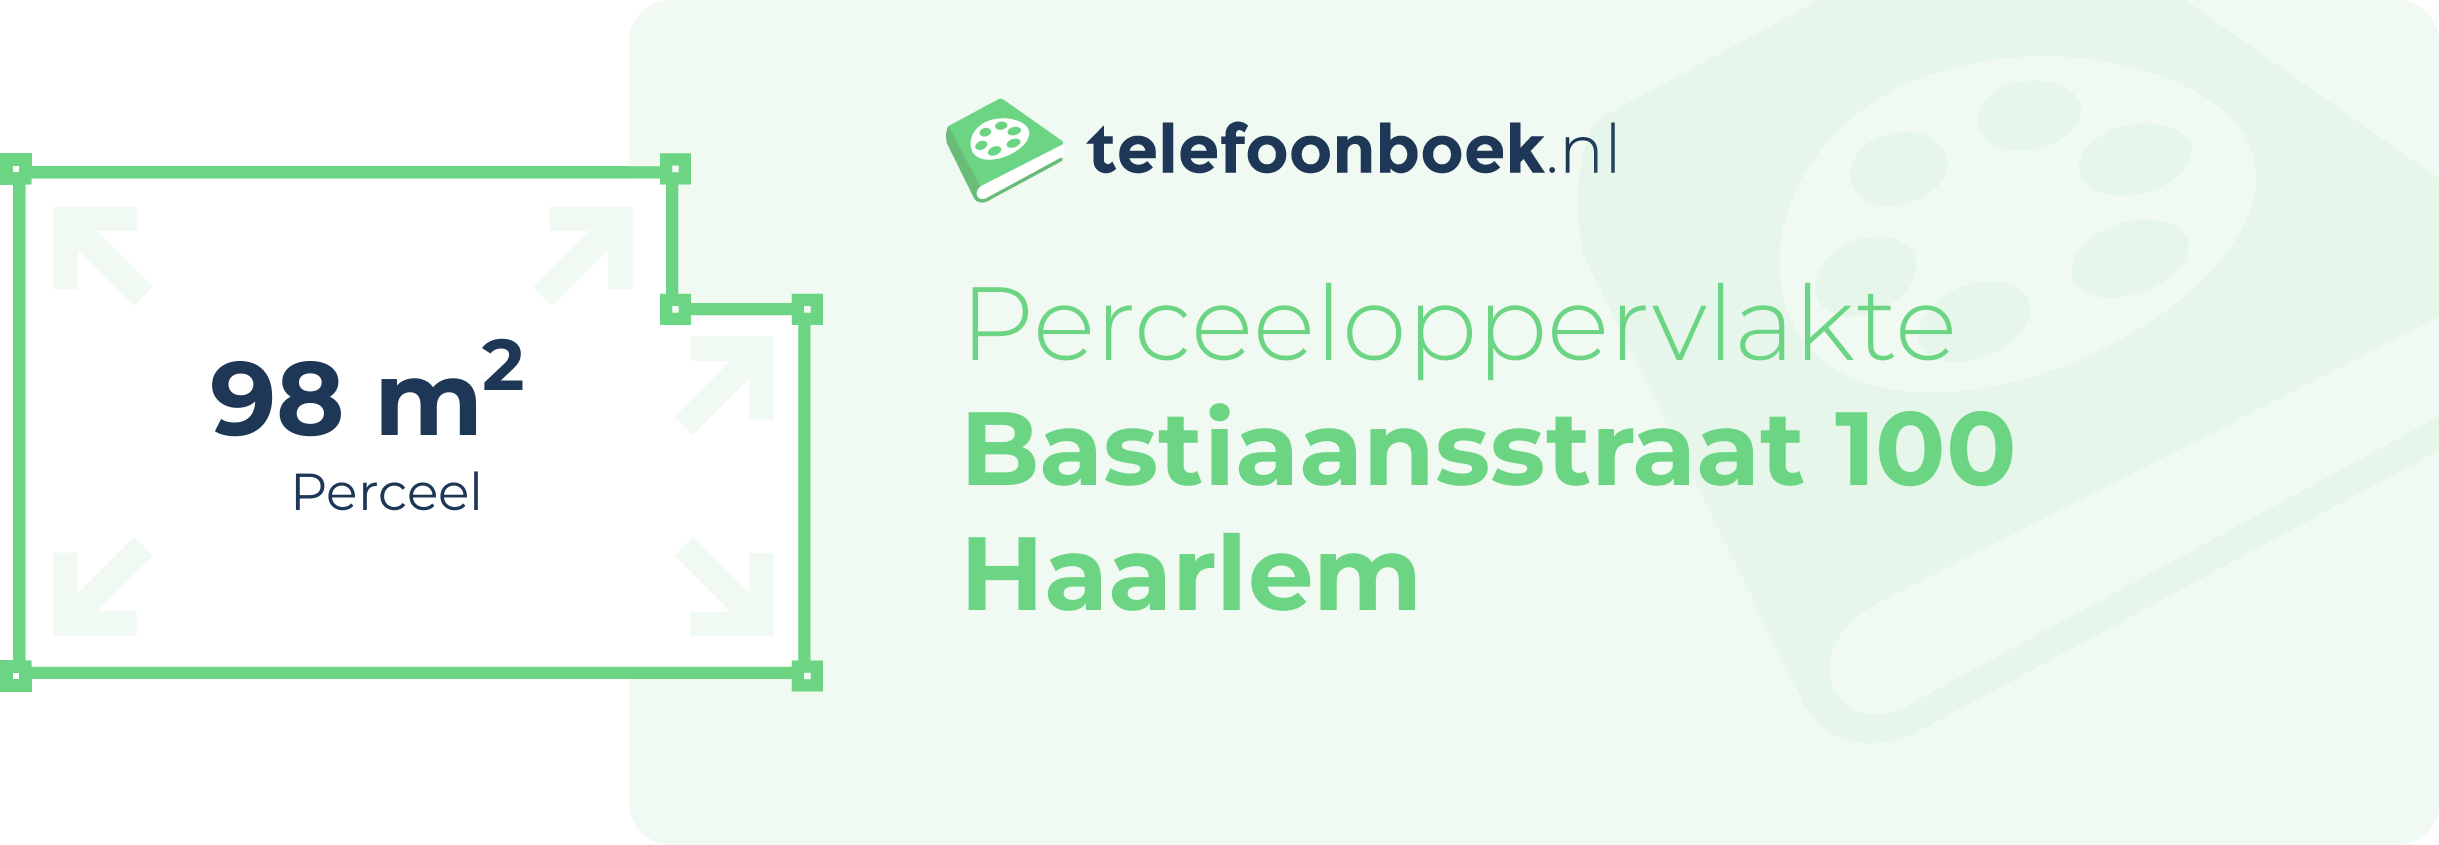 Perceeloppervlakte Bastiaansstraat 100 Haarlem